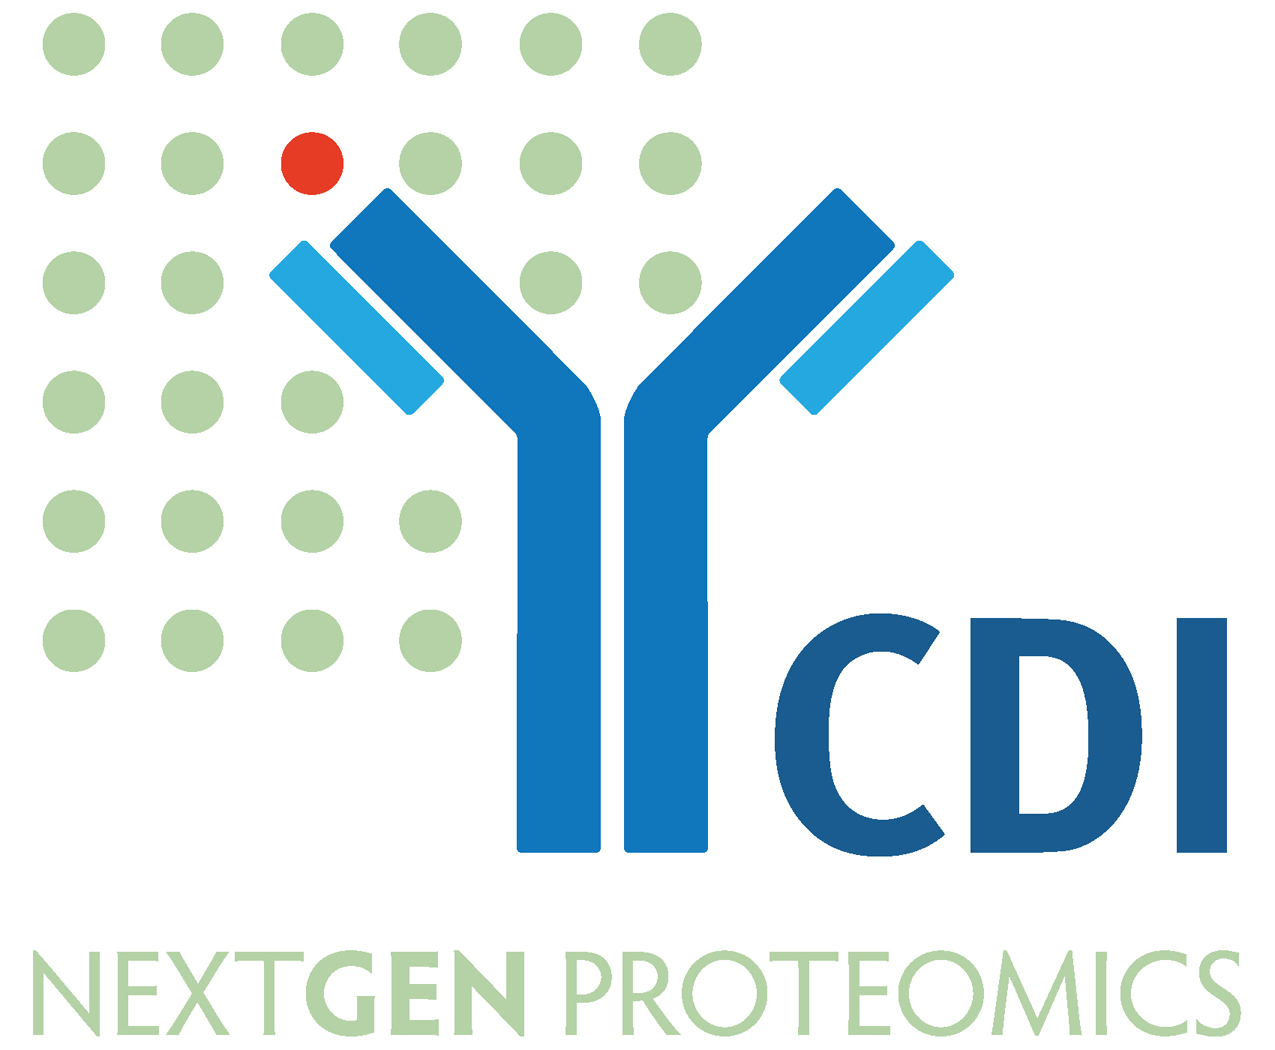 Nextgen Proteomics